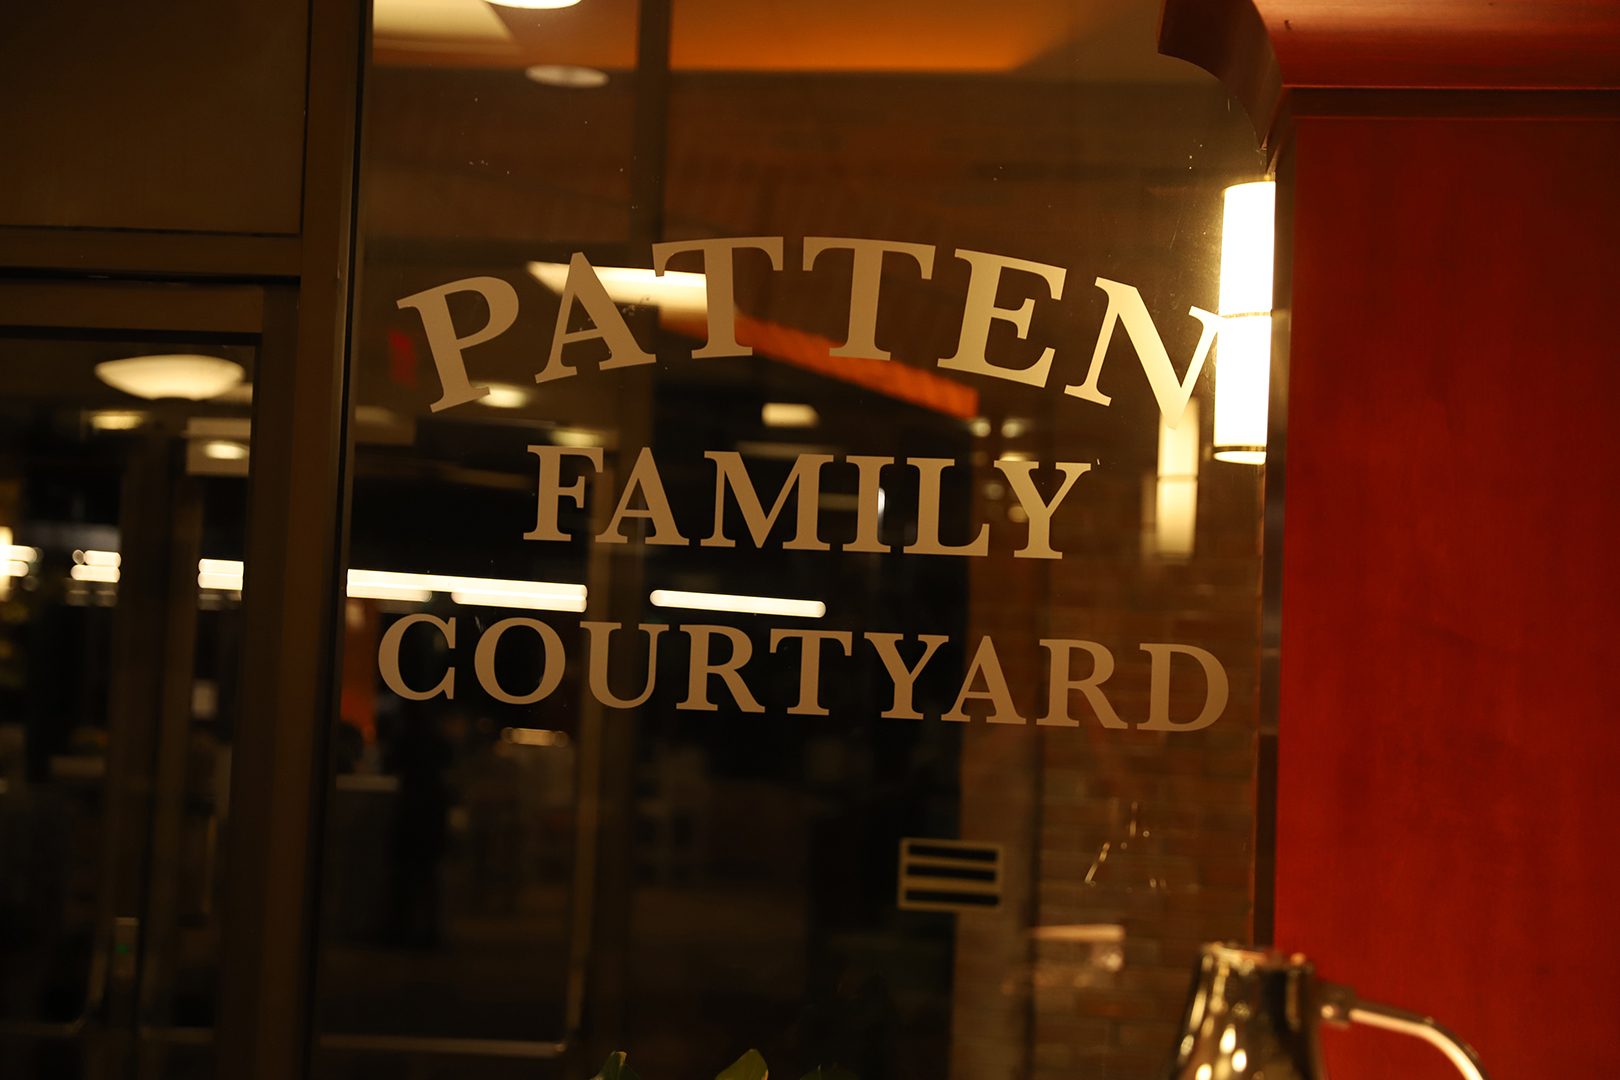 Patten Family Courtyard